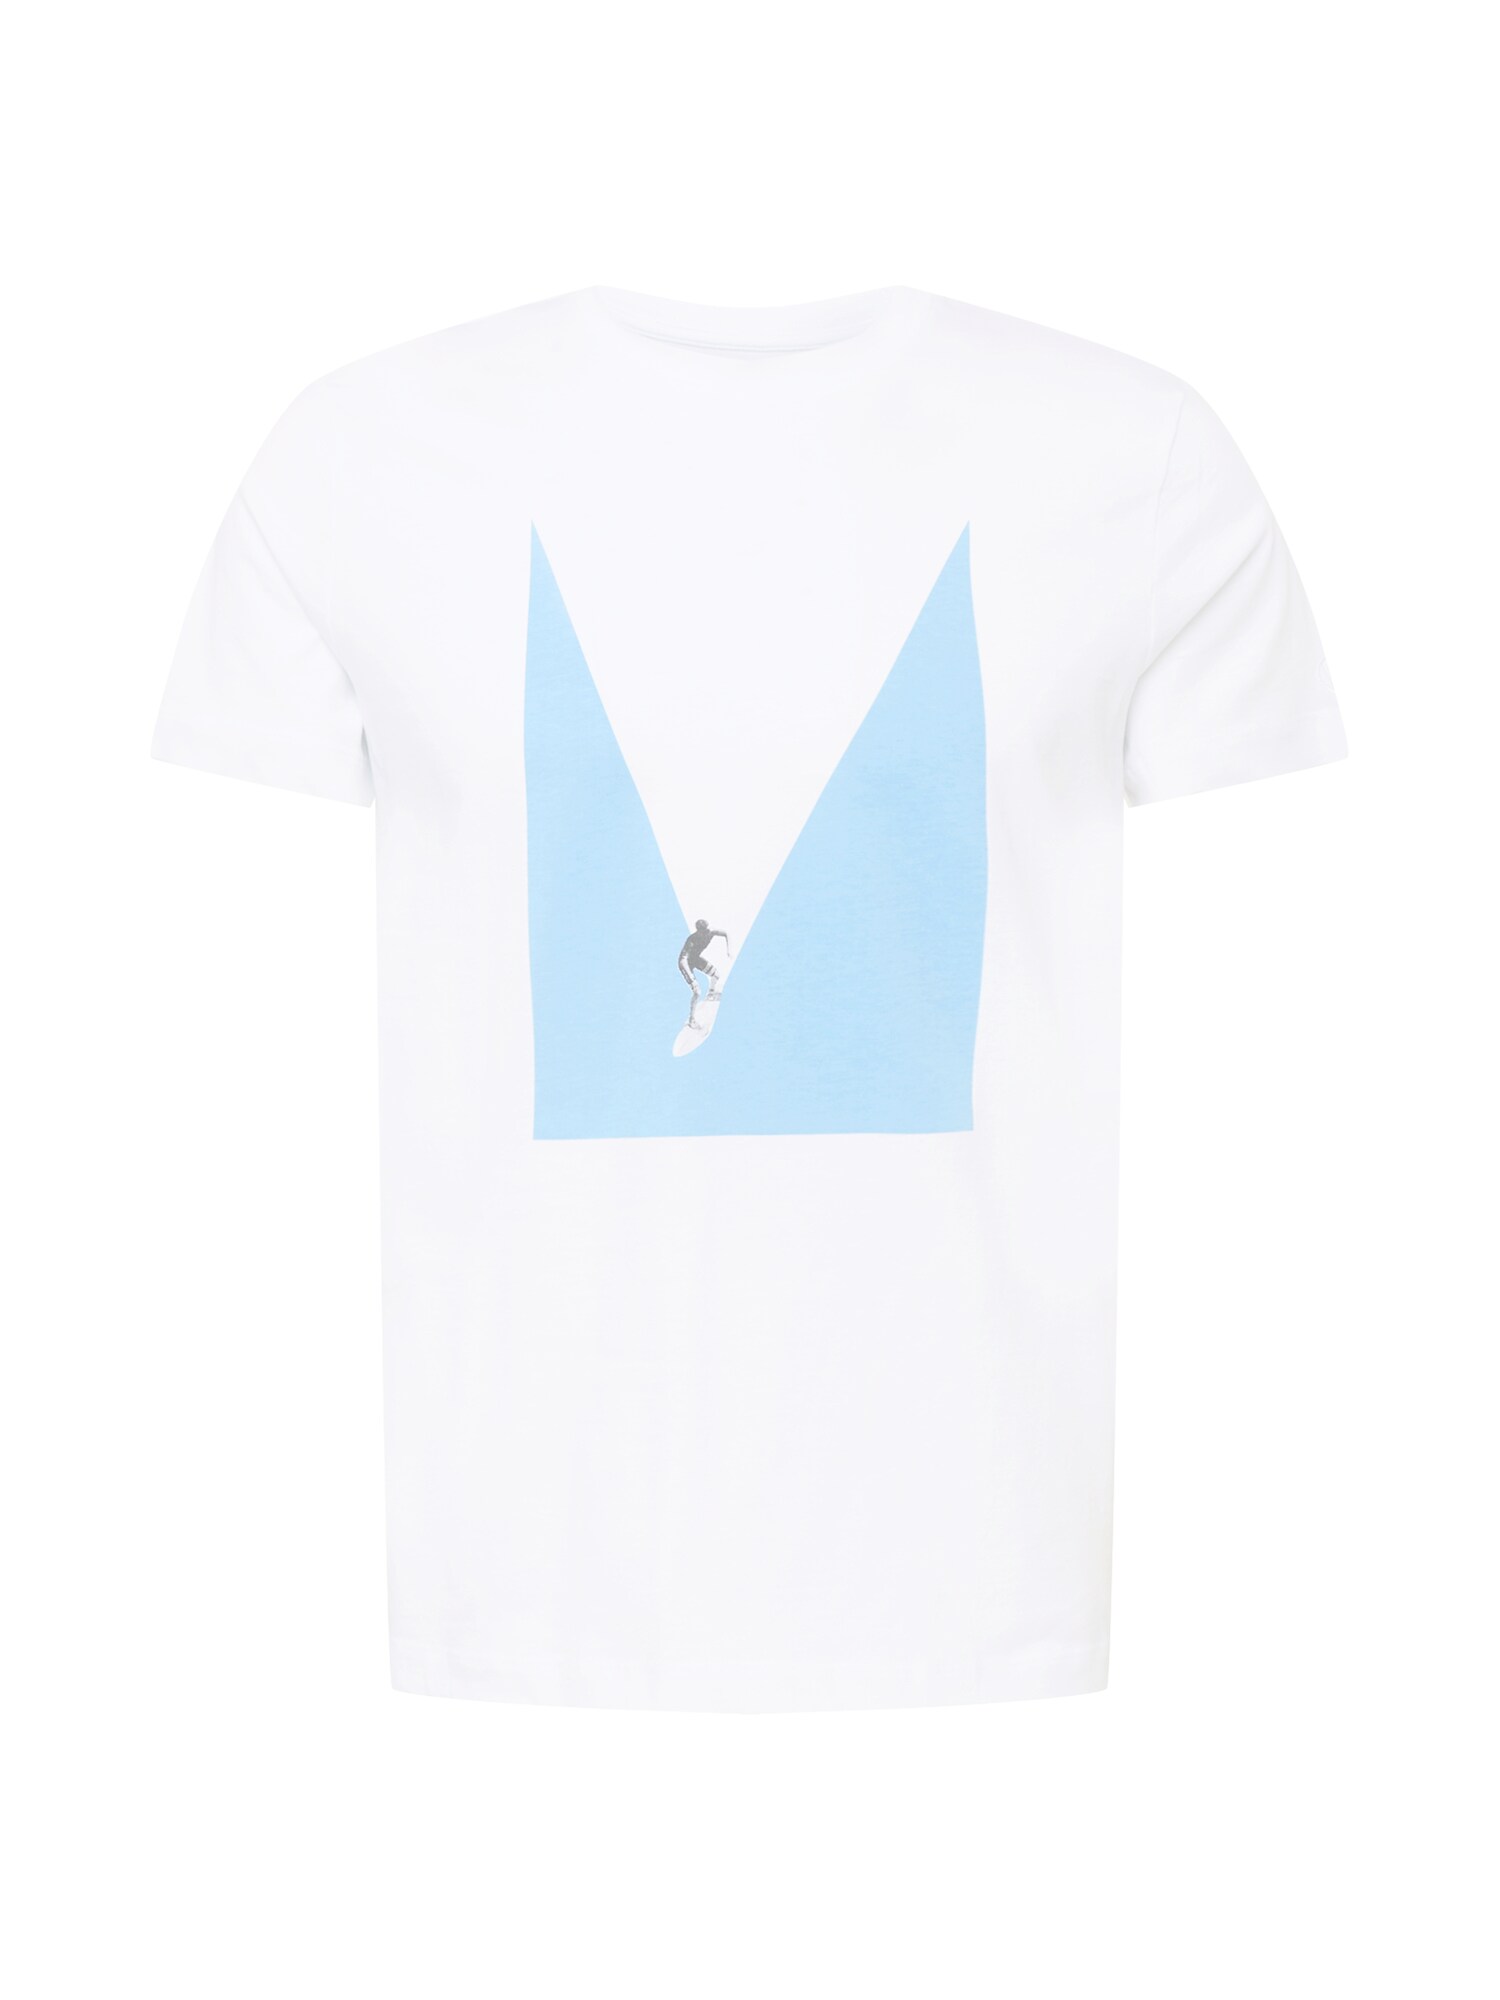 WESTMARK LONDON Marškinėliai 'WAKEBOARD' šviesiai mėlyna / pilka / balta